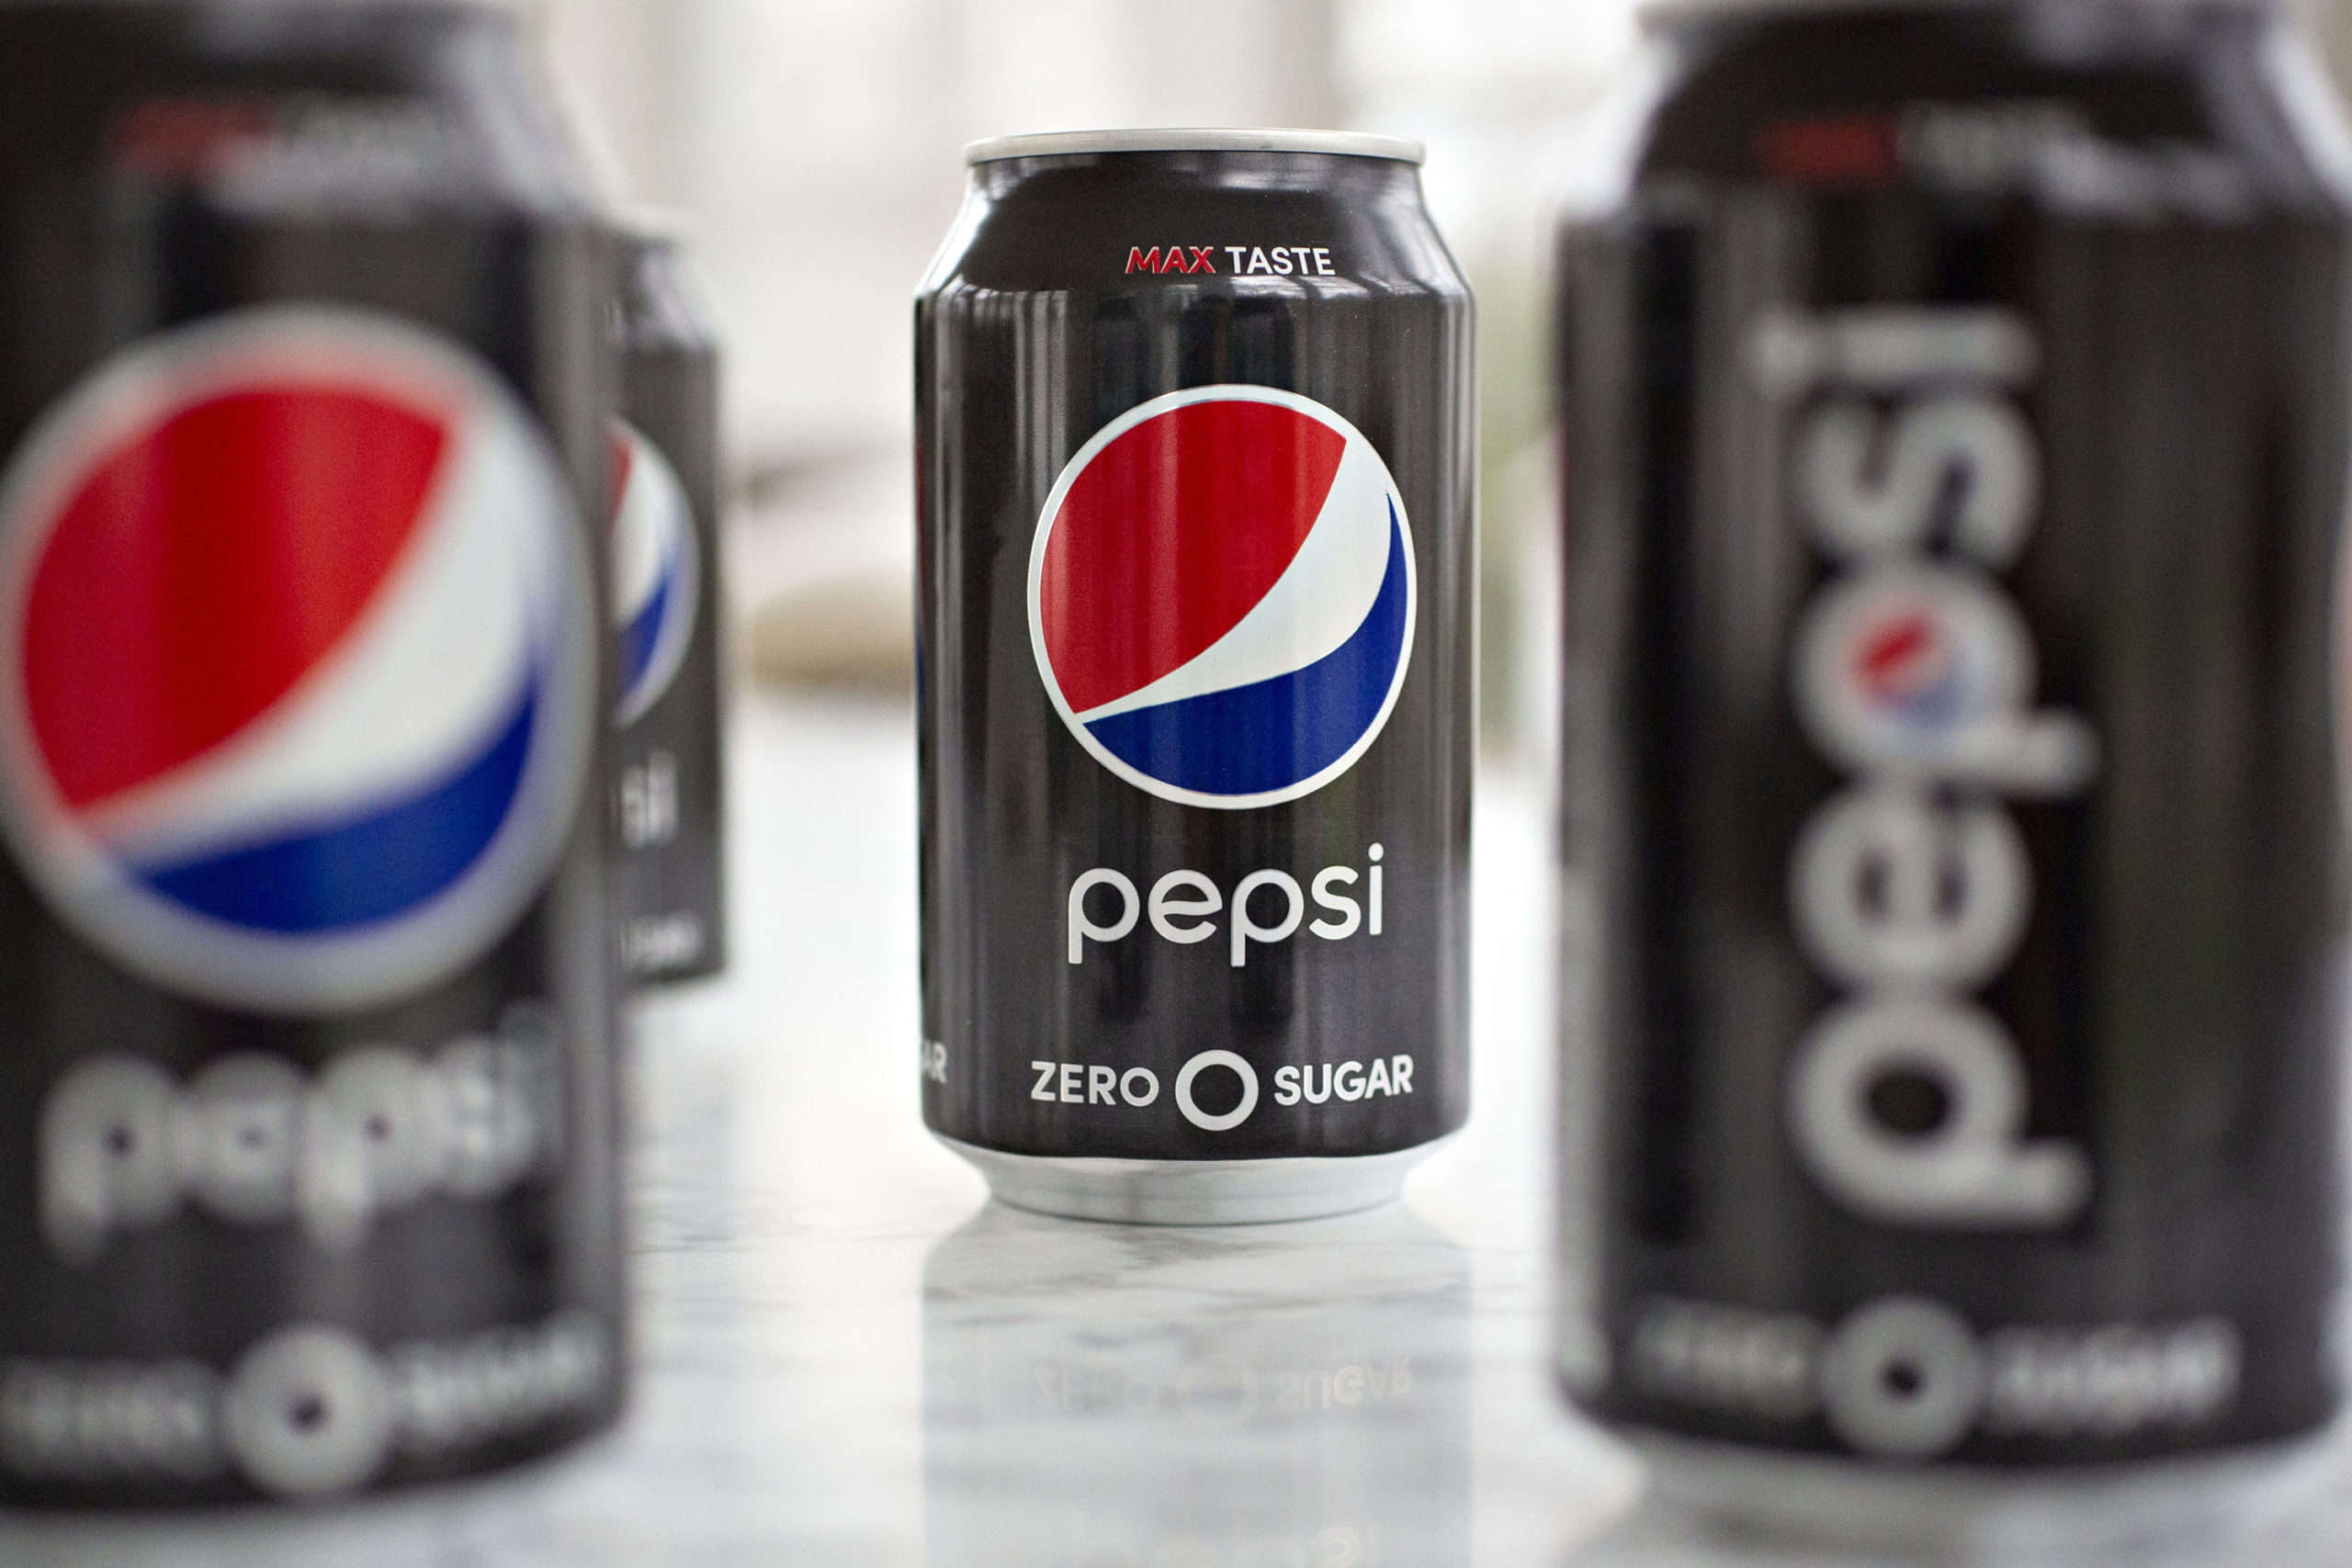 Pepsi to offer away Zero Sugar sodas if Tremendous Bowl staff rating ends in zero